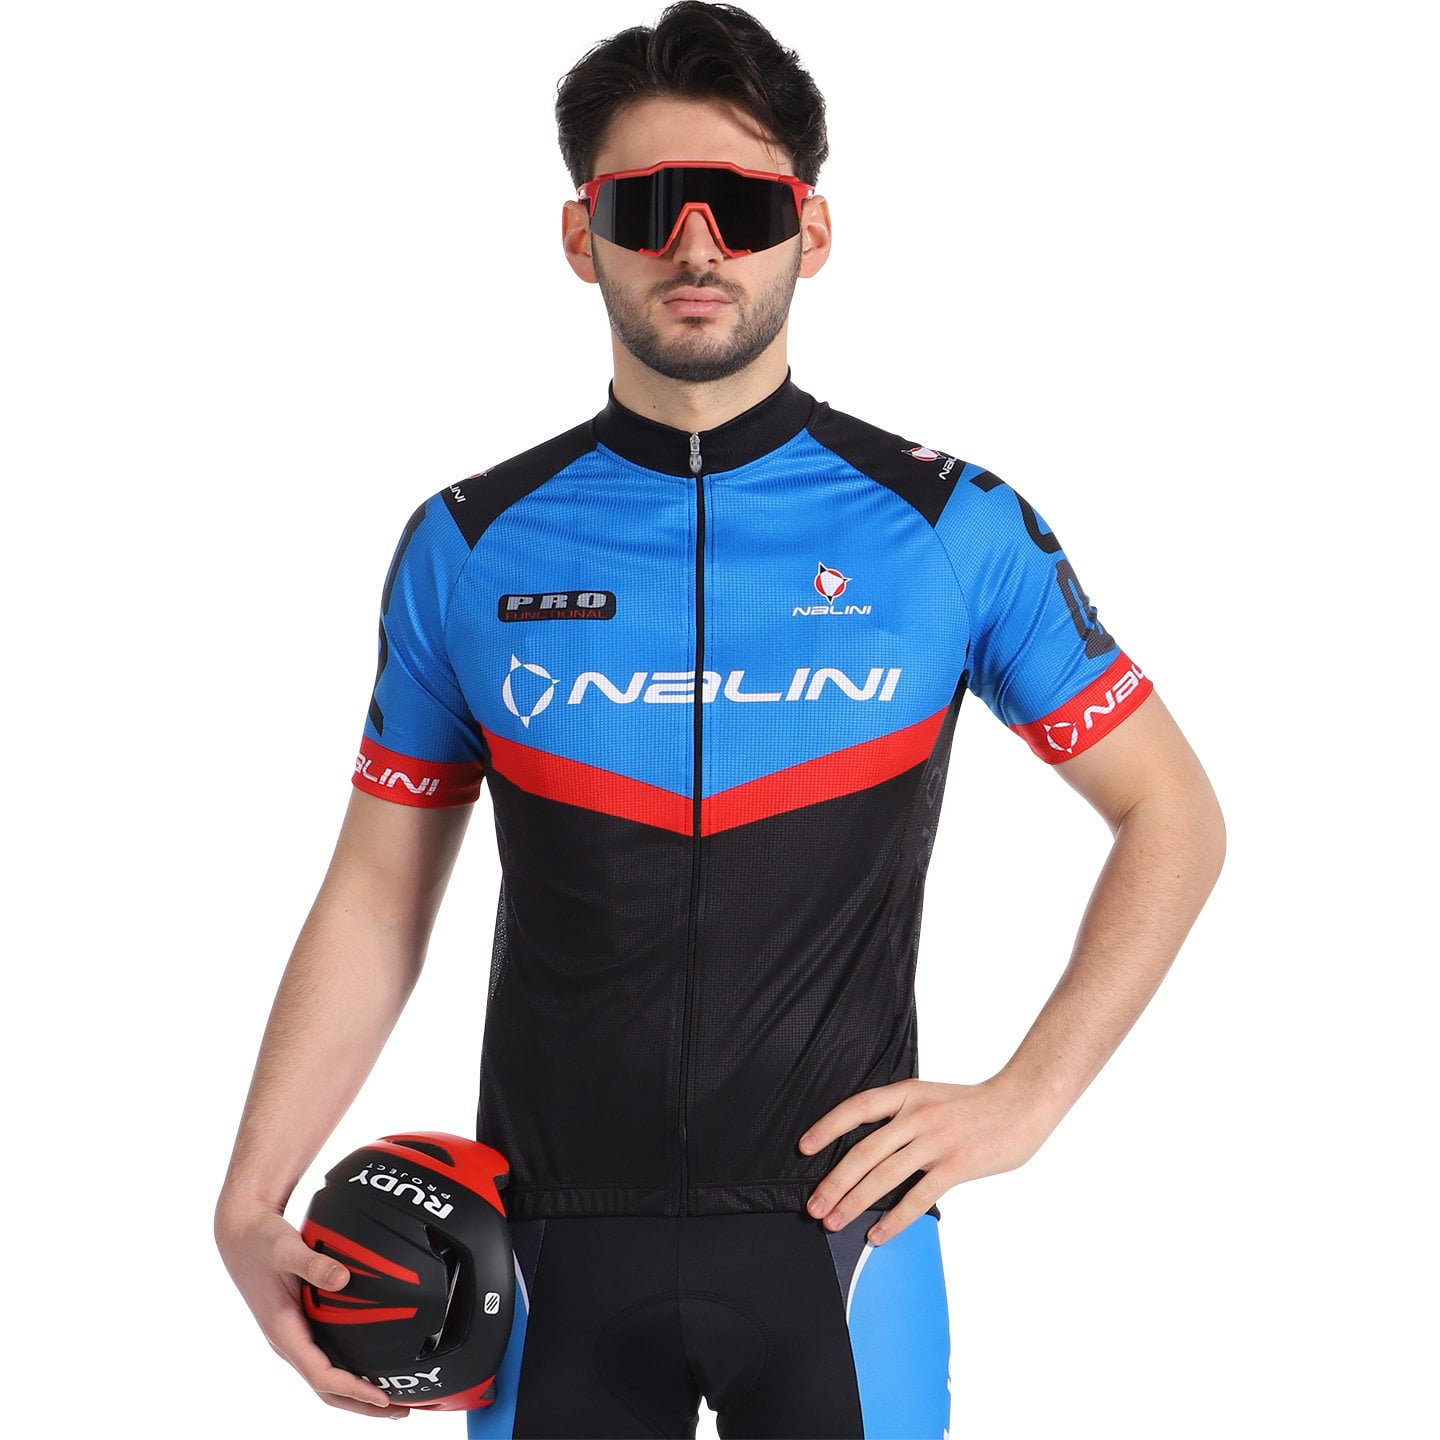 NALINI Short Sleeve Jersey Rigel 2 Bar, for men, size S, Cycling jersey, Cycling clothing